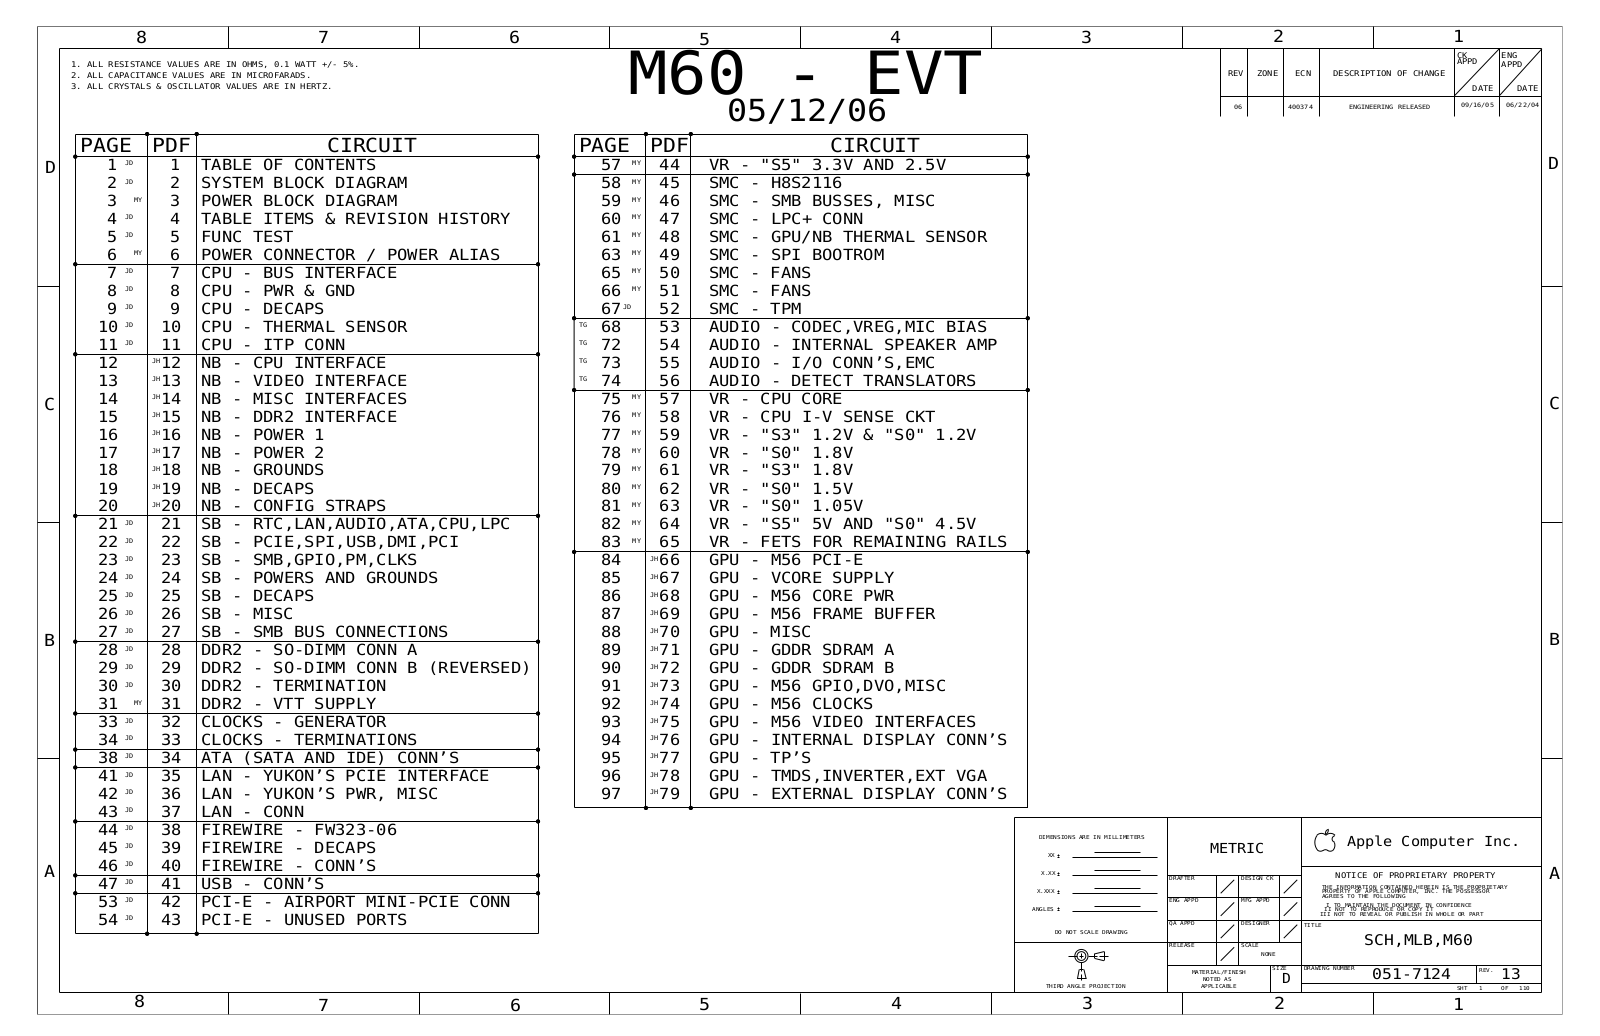 Apple iMAC 20-M60-EVT-MLB-051-7124 Schematic